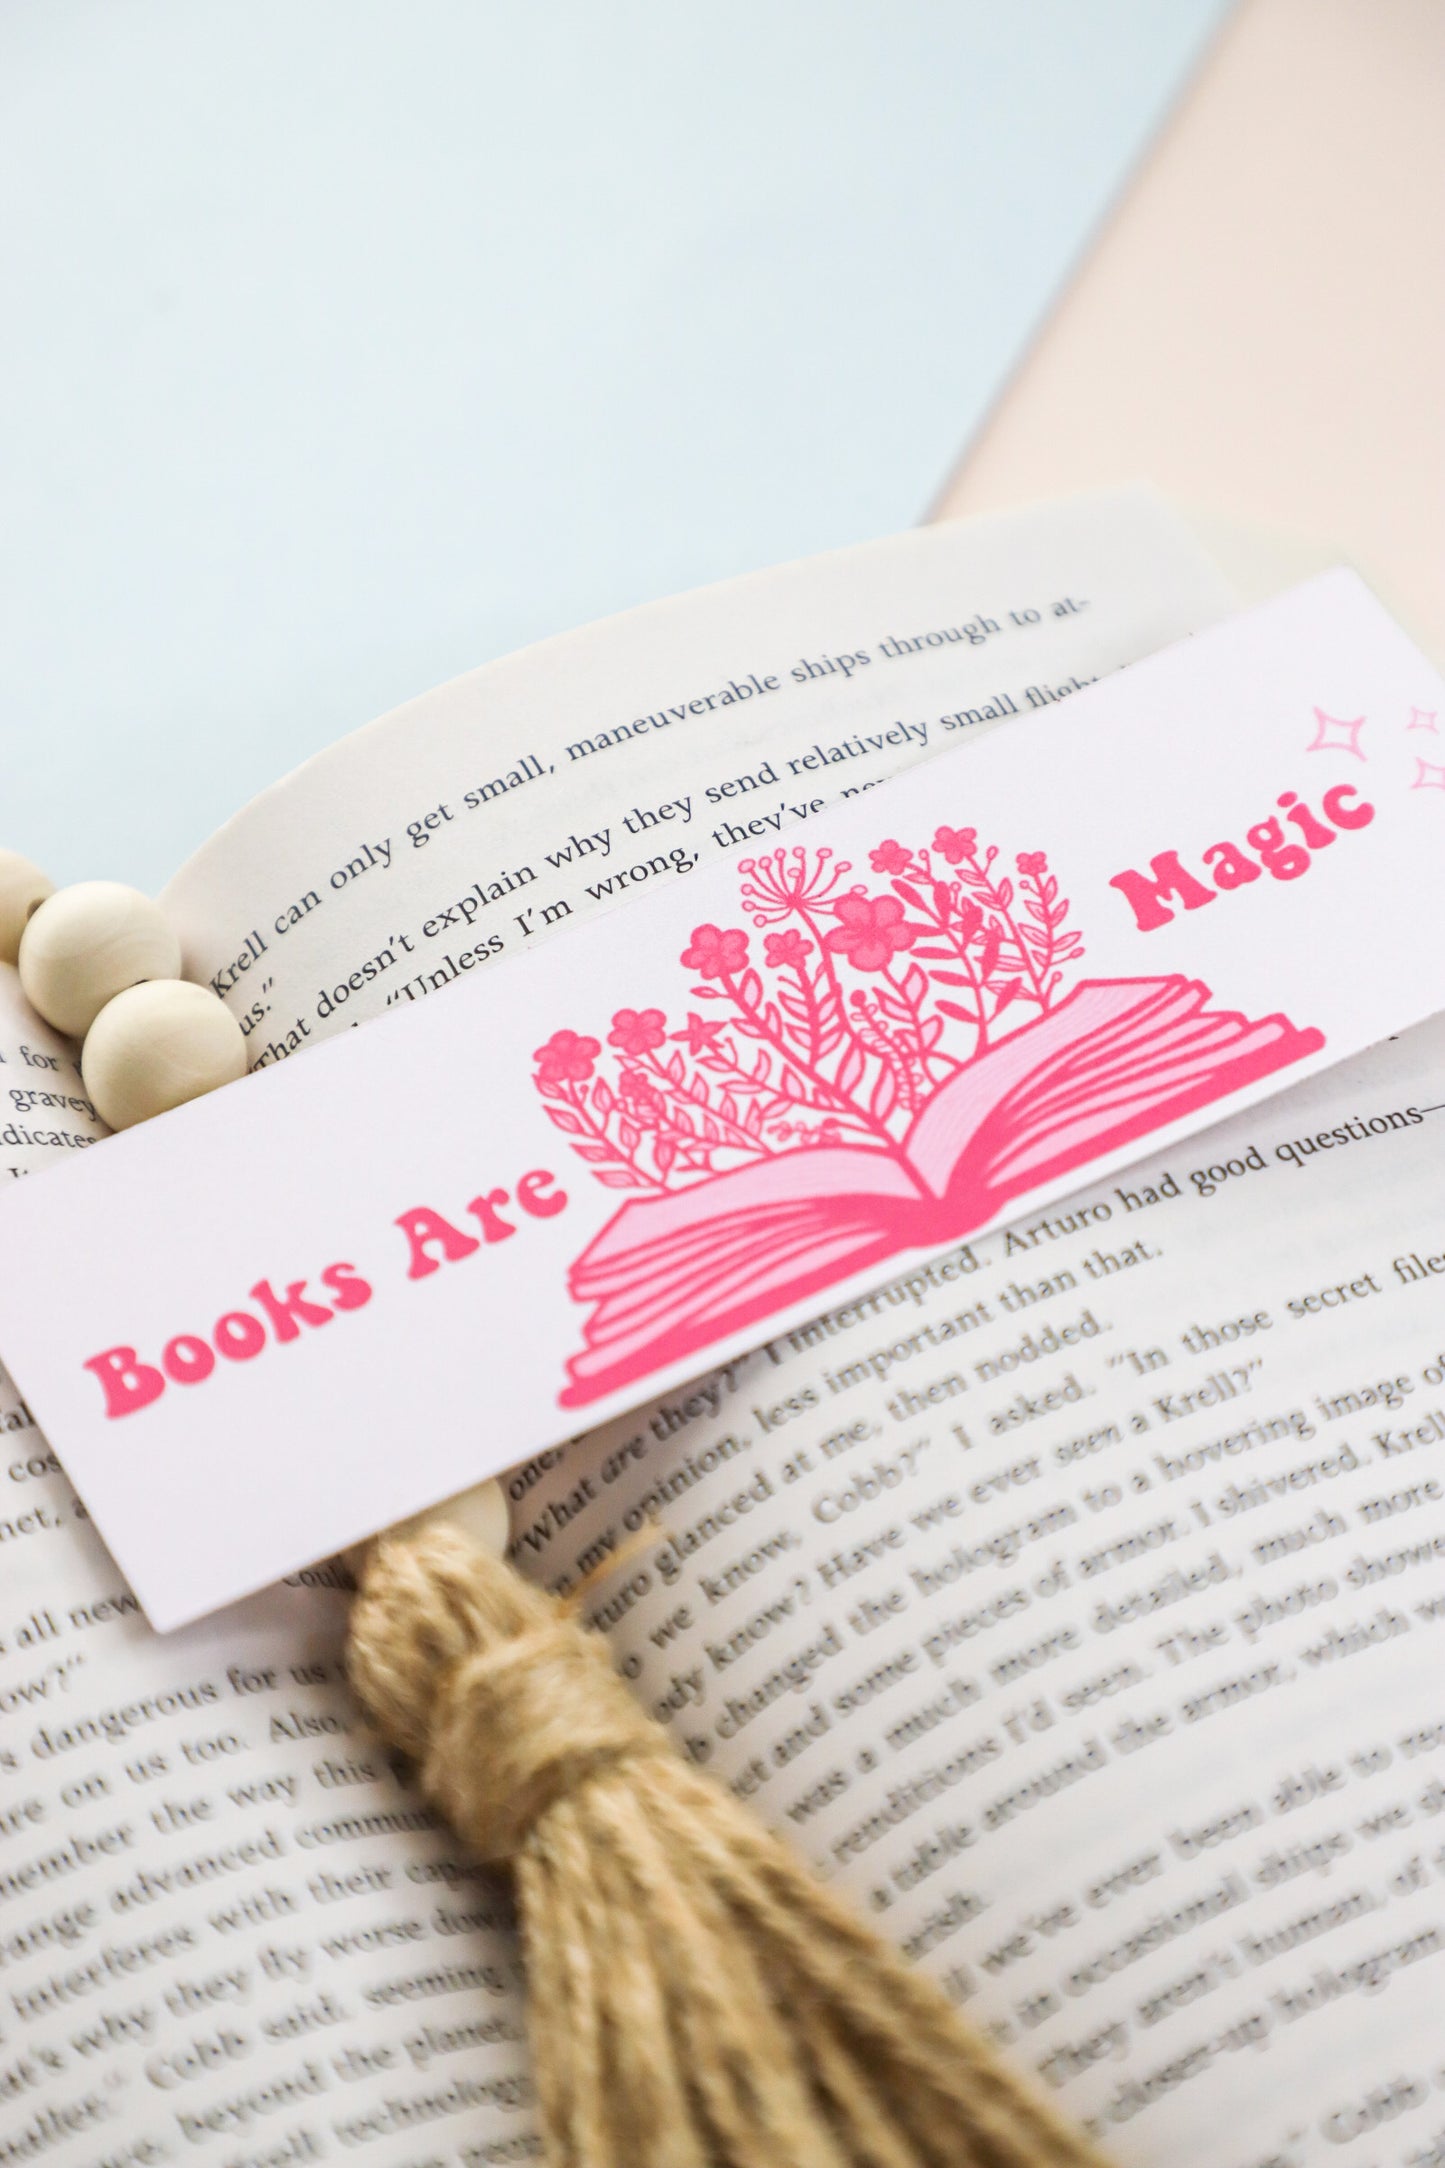 Books Are Magic Bookmark